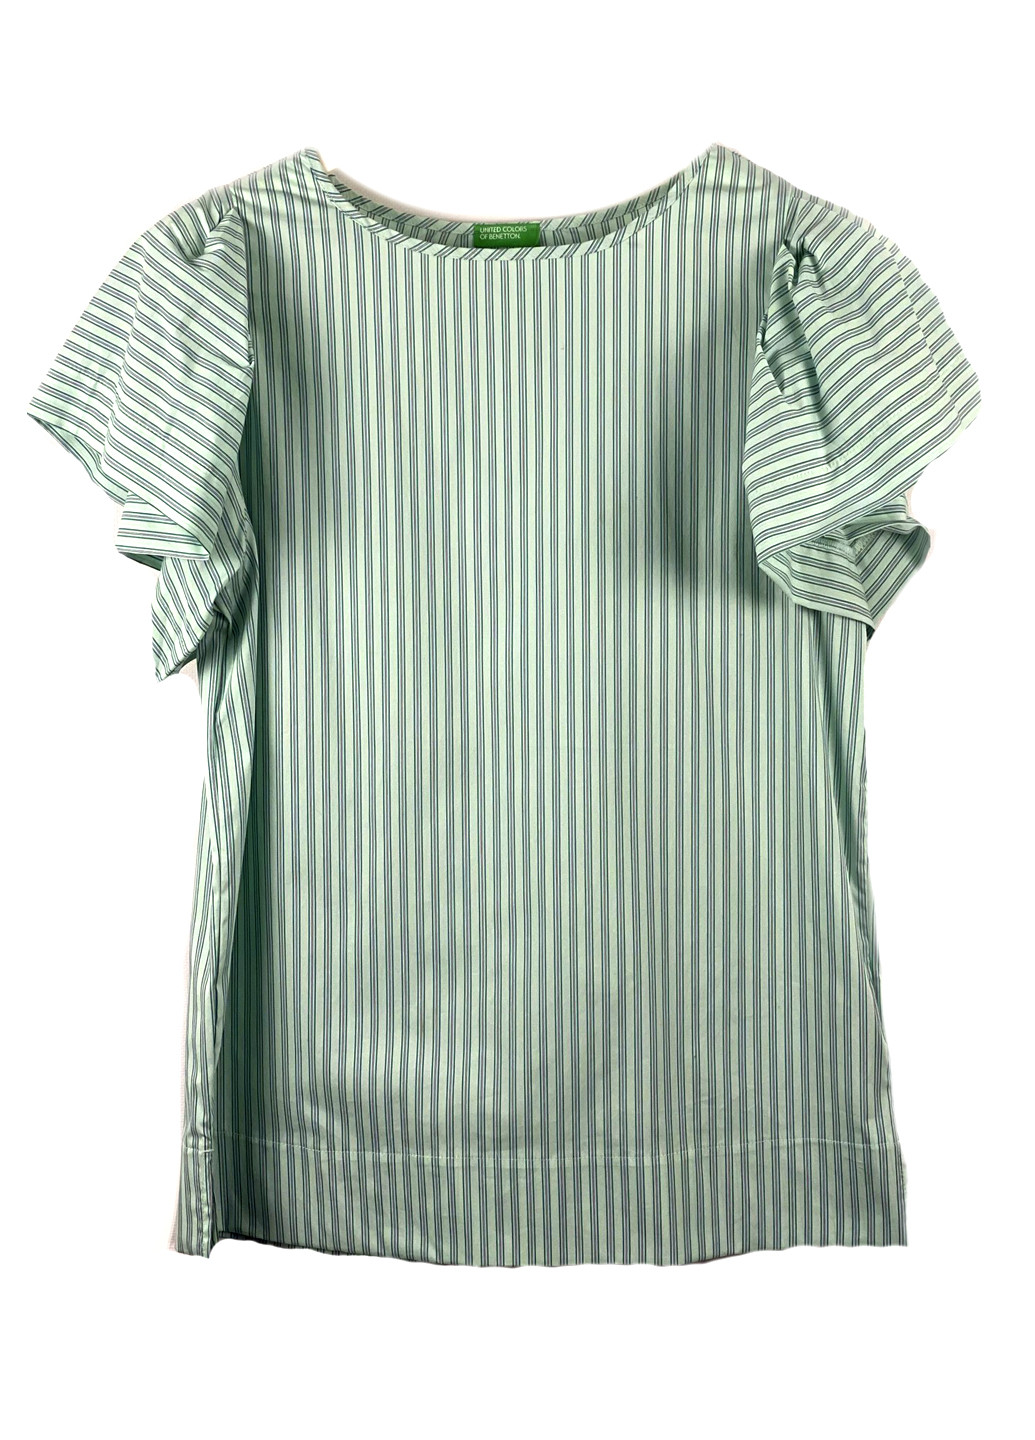 Бирюзовая демисезонная блуза United Colors of Benetton